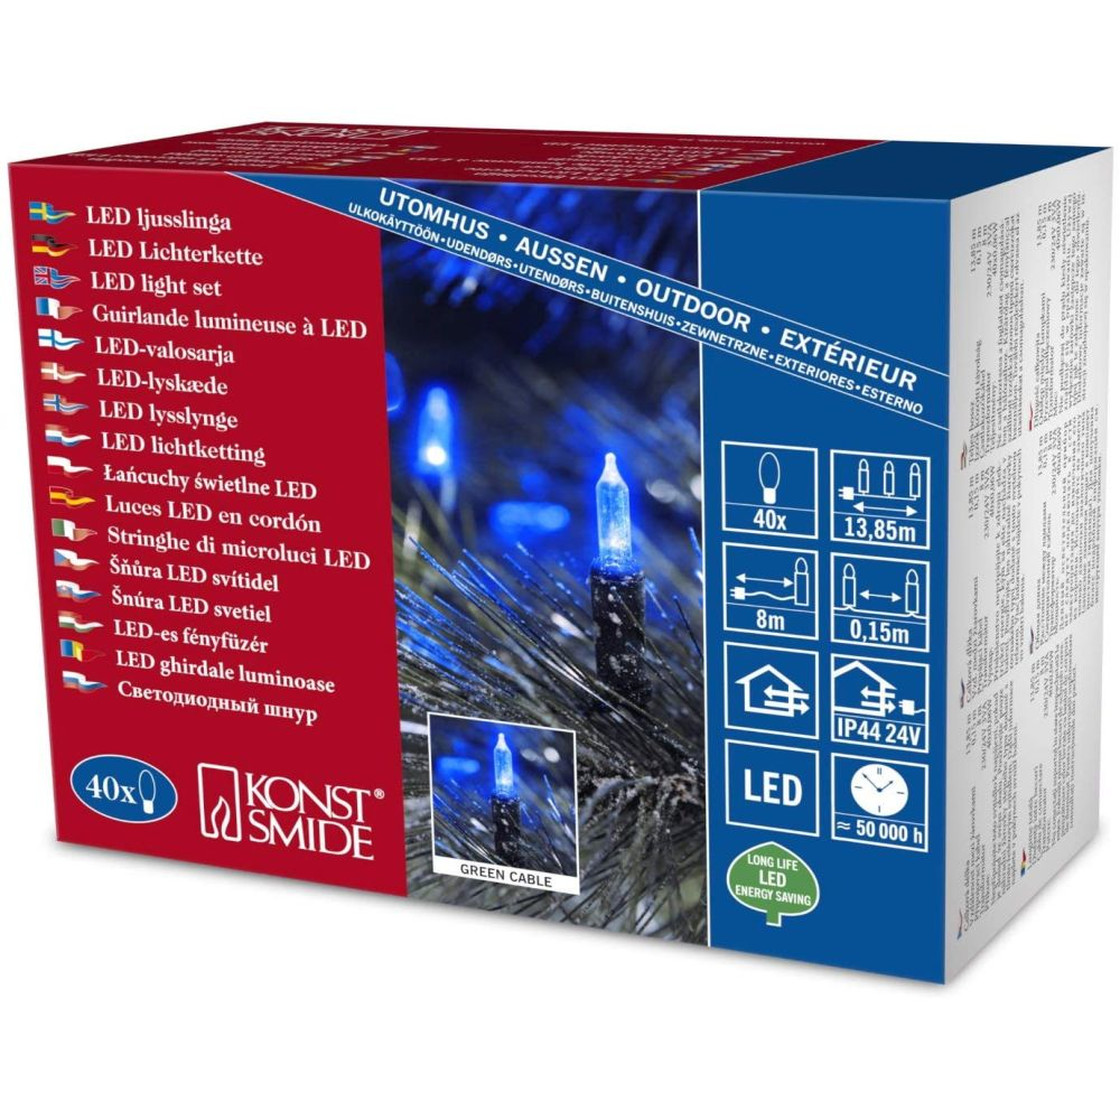 Konstsmide 6004-400 LED Minilichterkette mit 40 Dioden Blau 24V Ausse